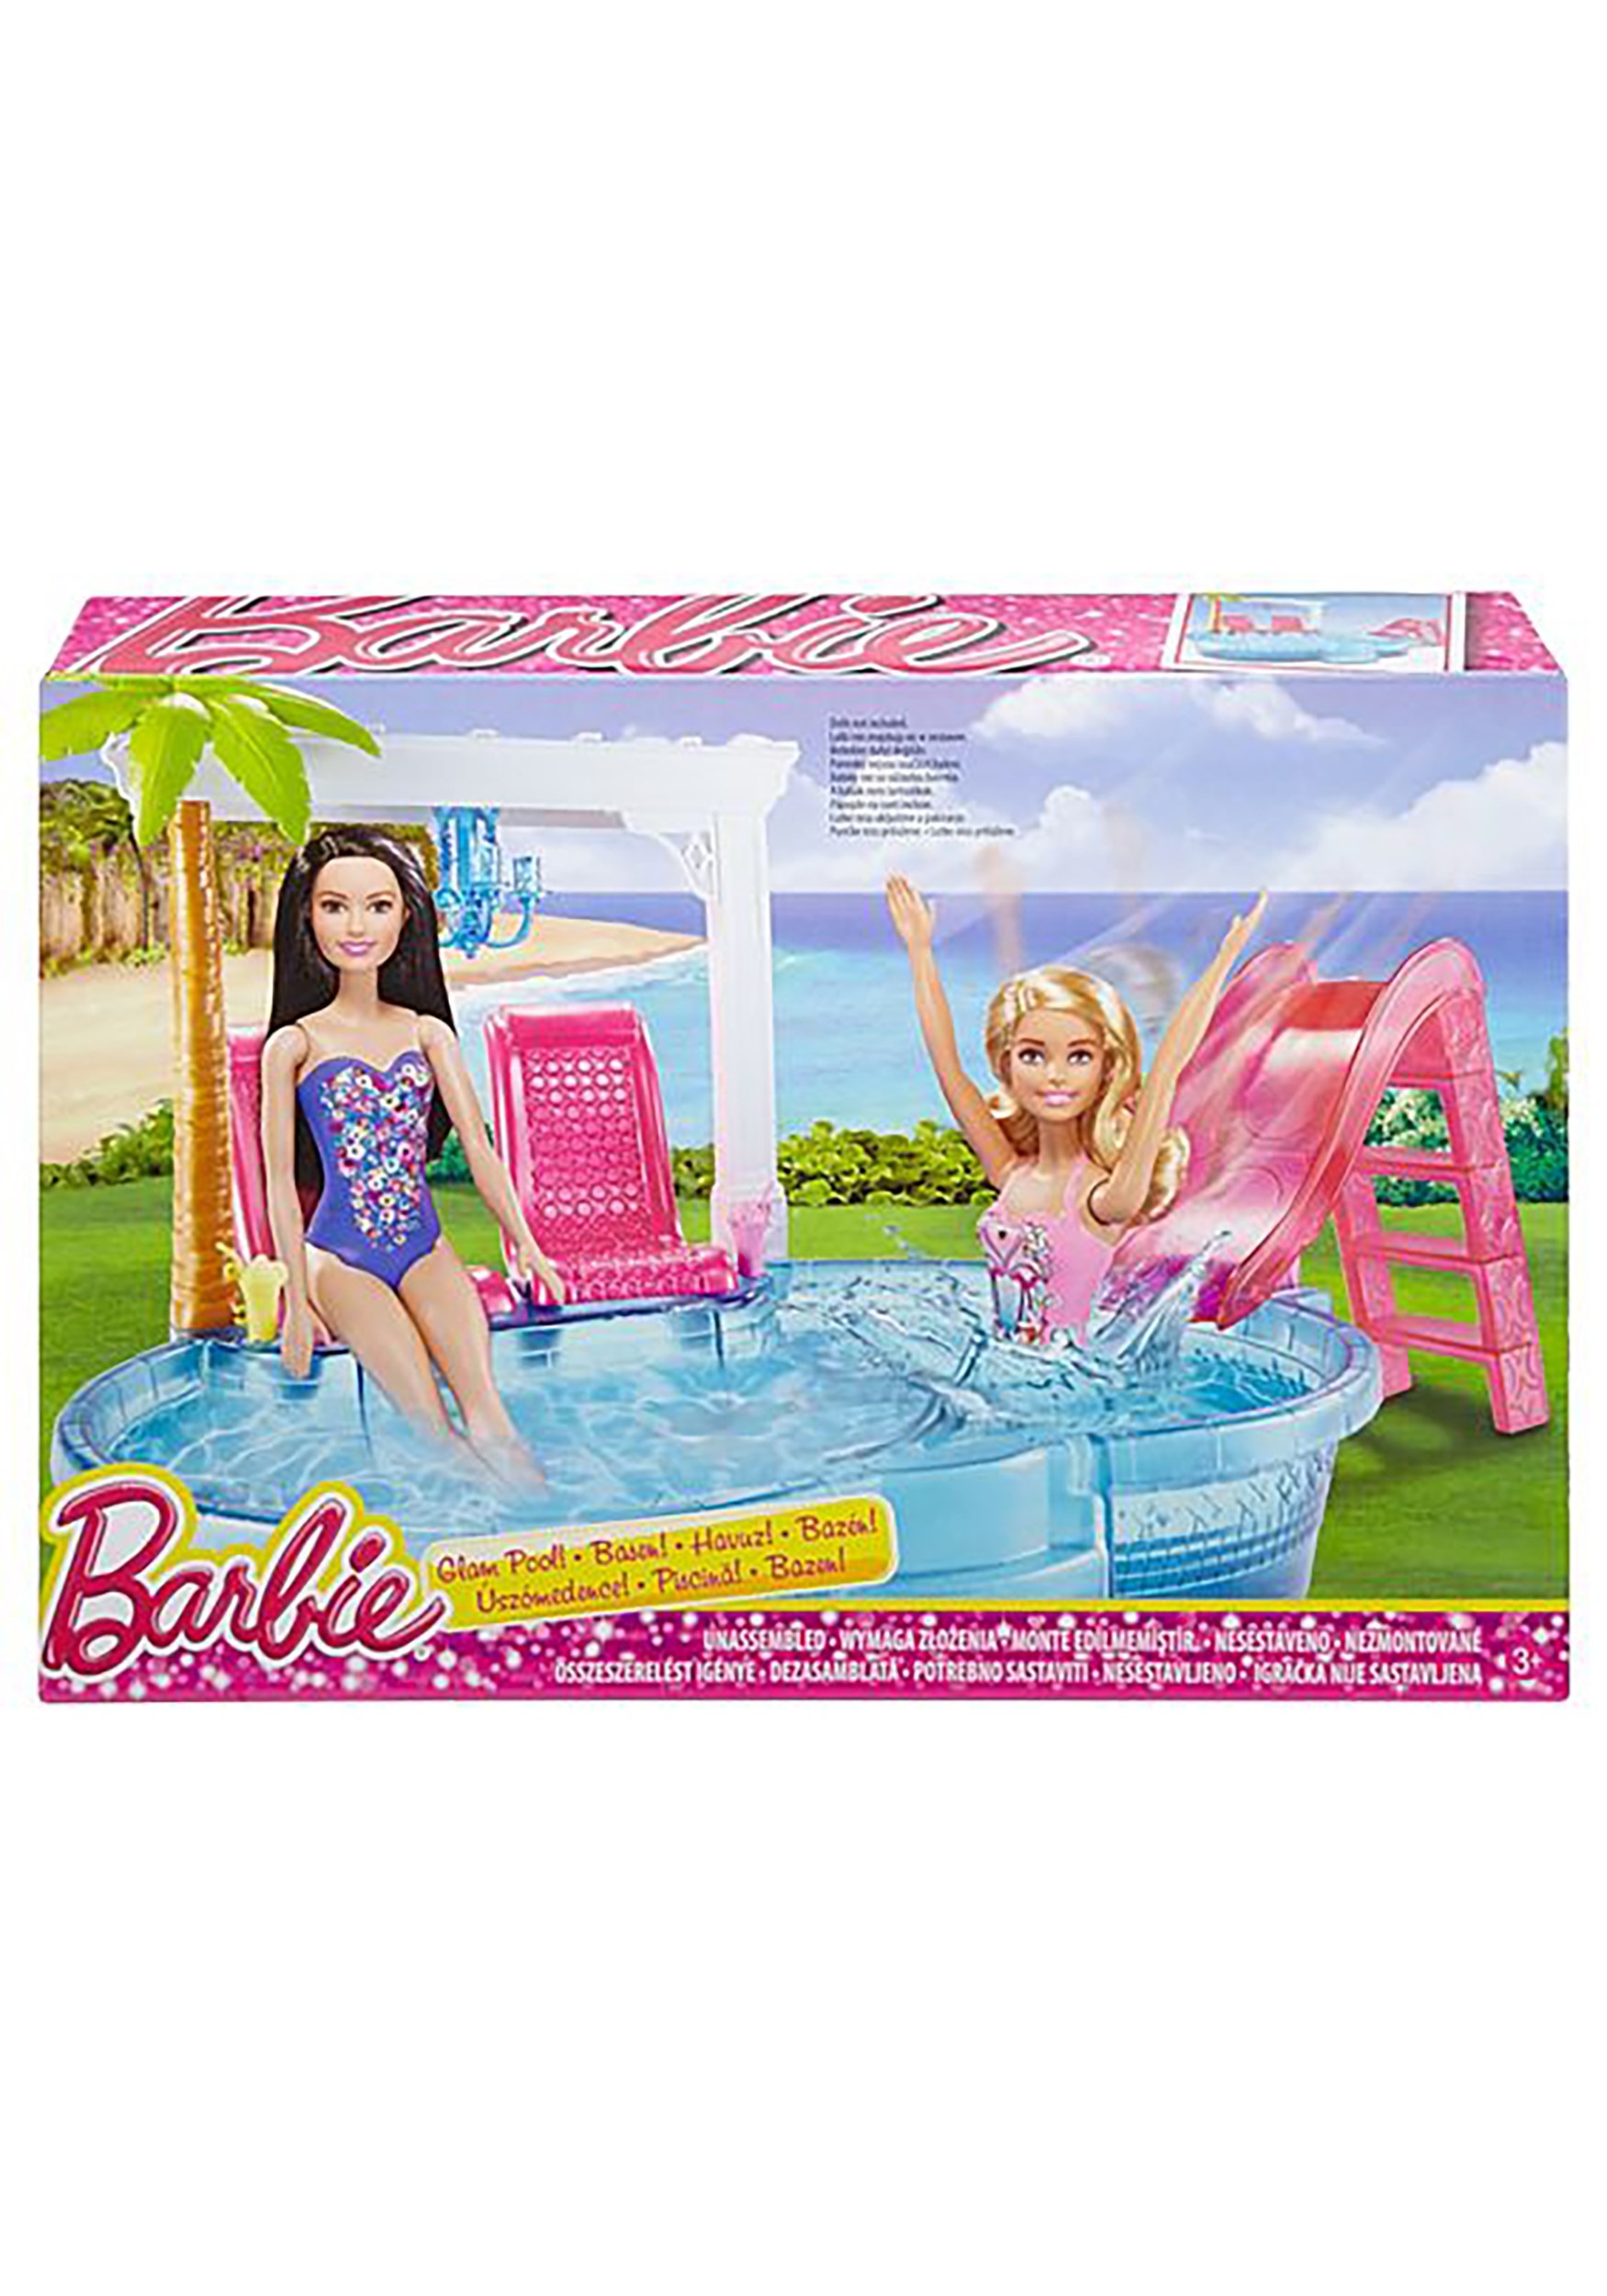 barbie supermarket game